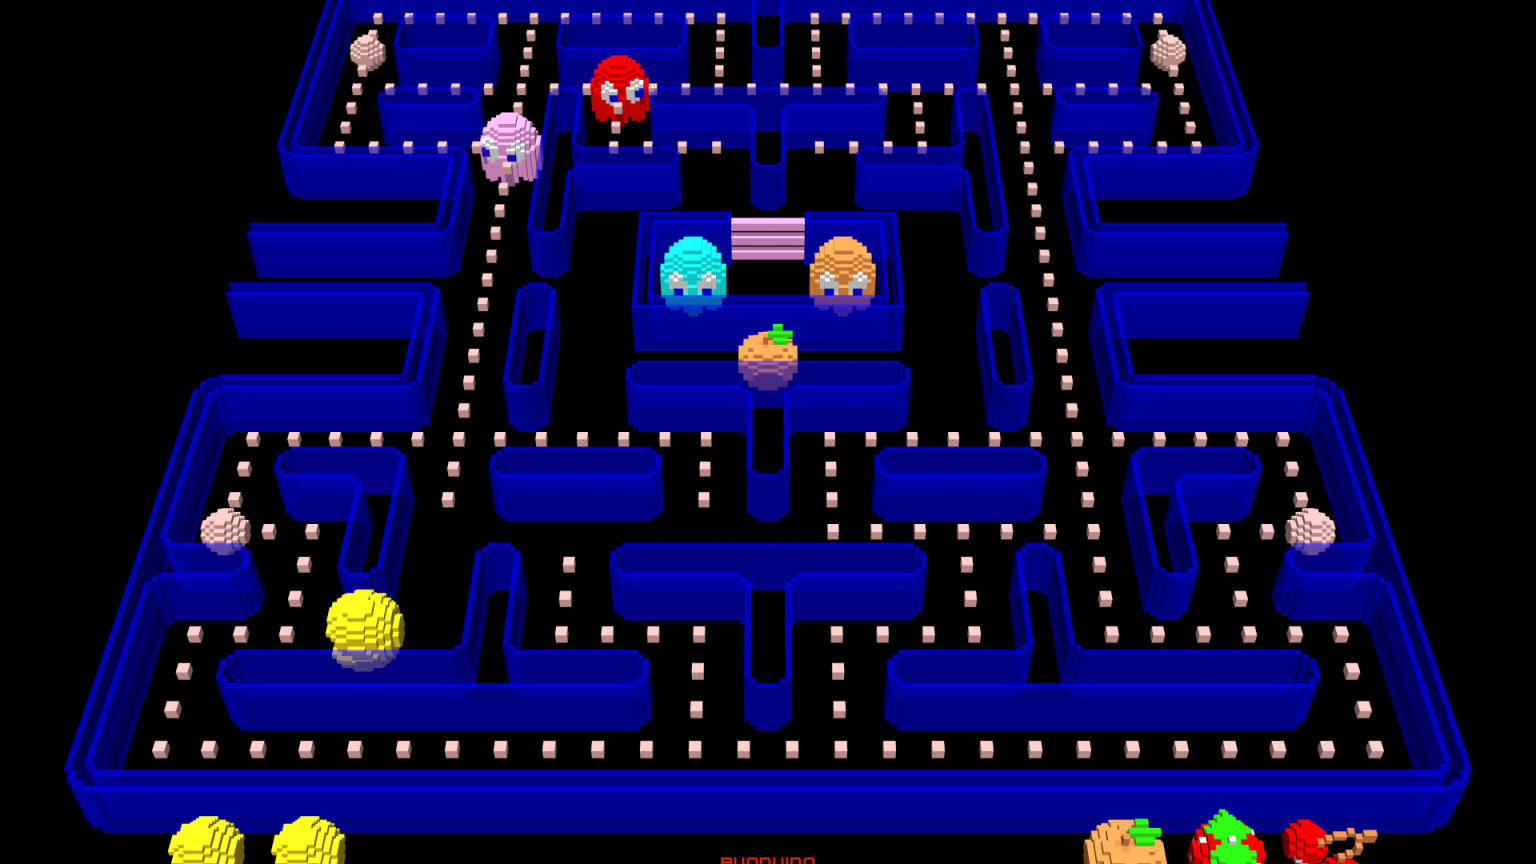 Pac man games. Пэкмен игра. Пакман Атари 2600. Пакмен игра Пакмен игра. Pacman игра 1980 года.